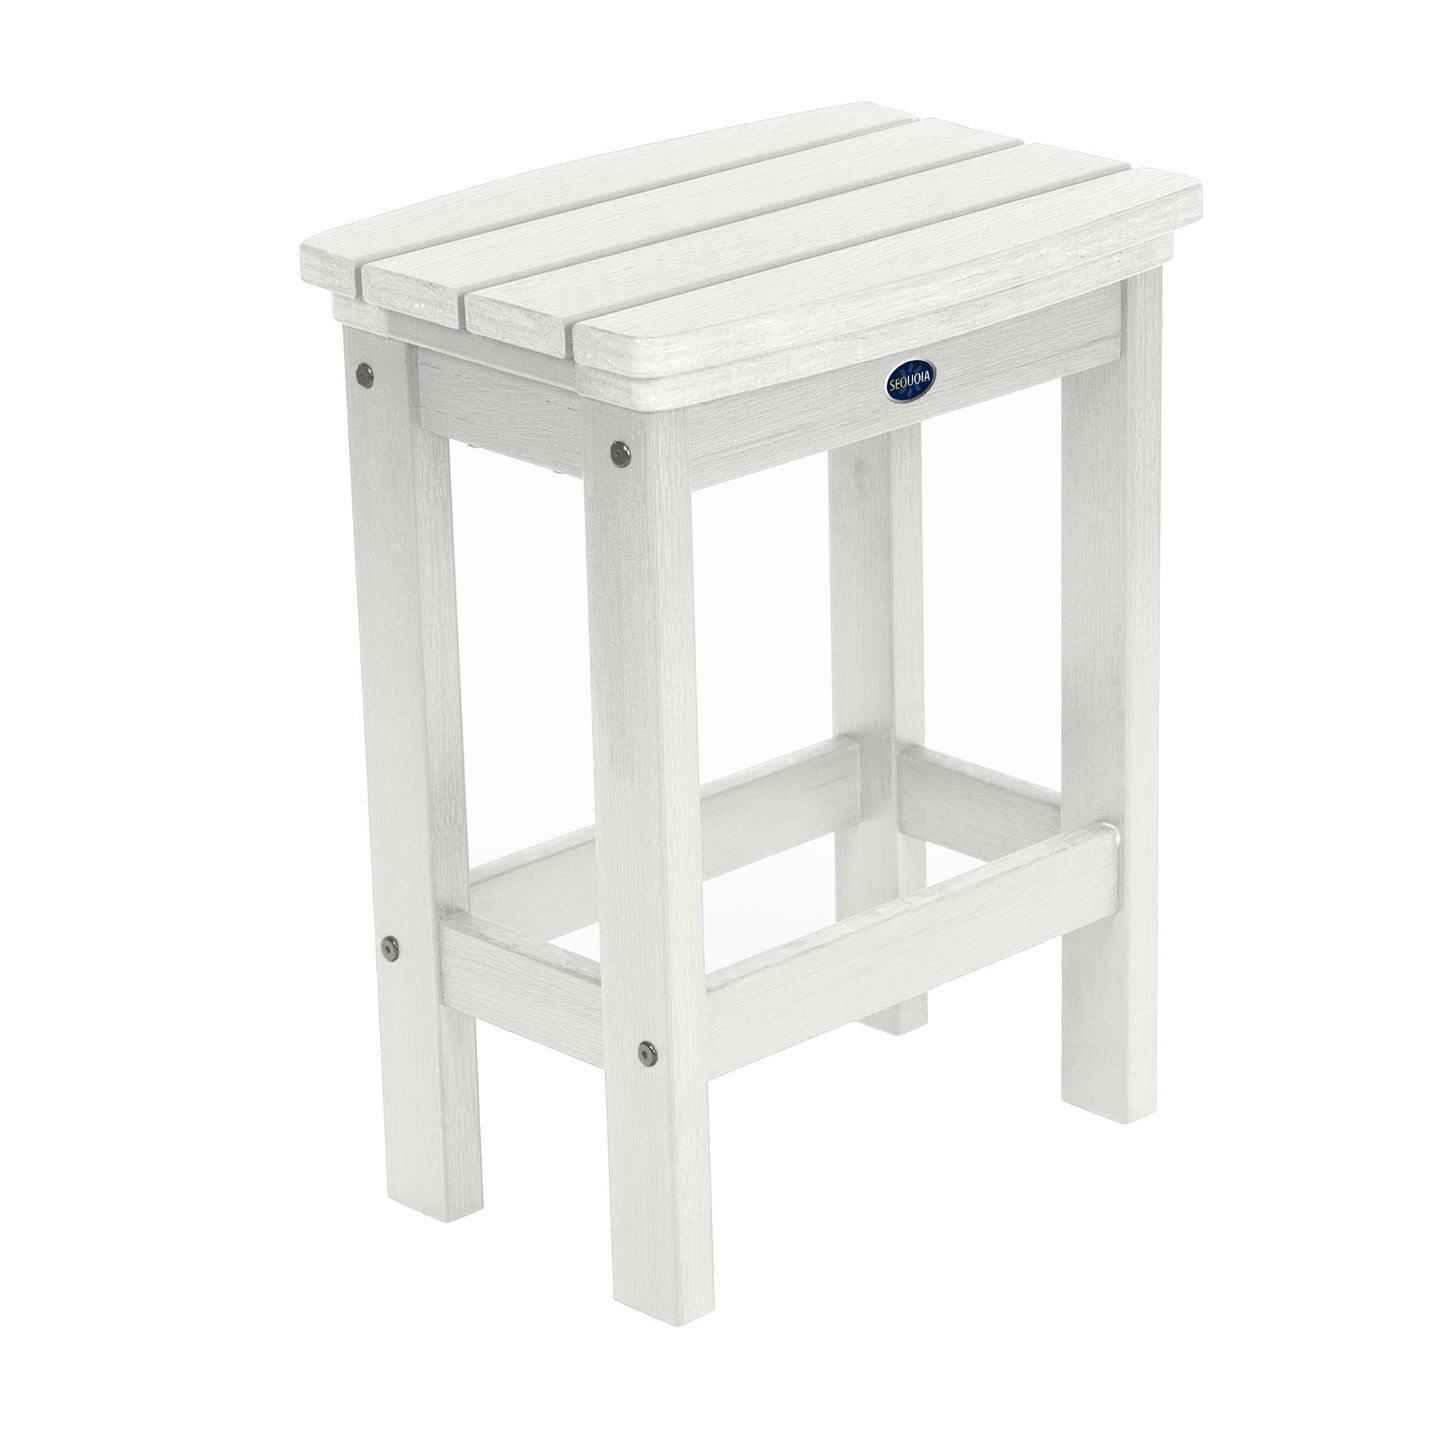 Blue Ridge counter height balcony stool in White